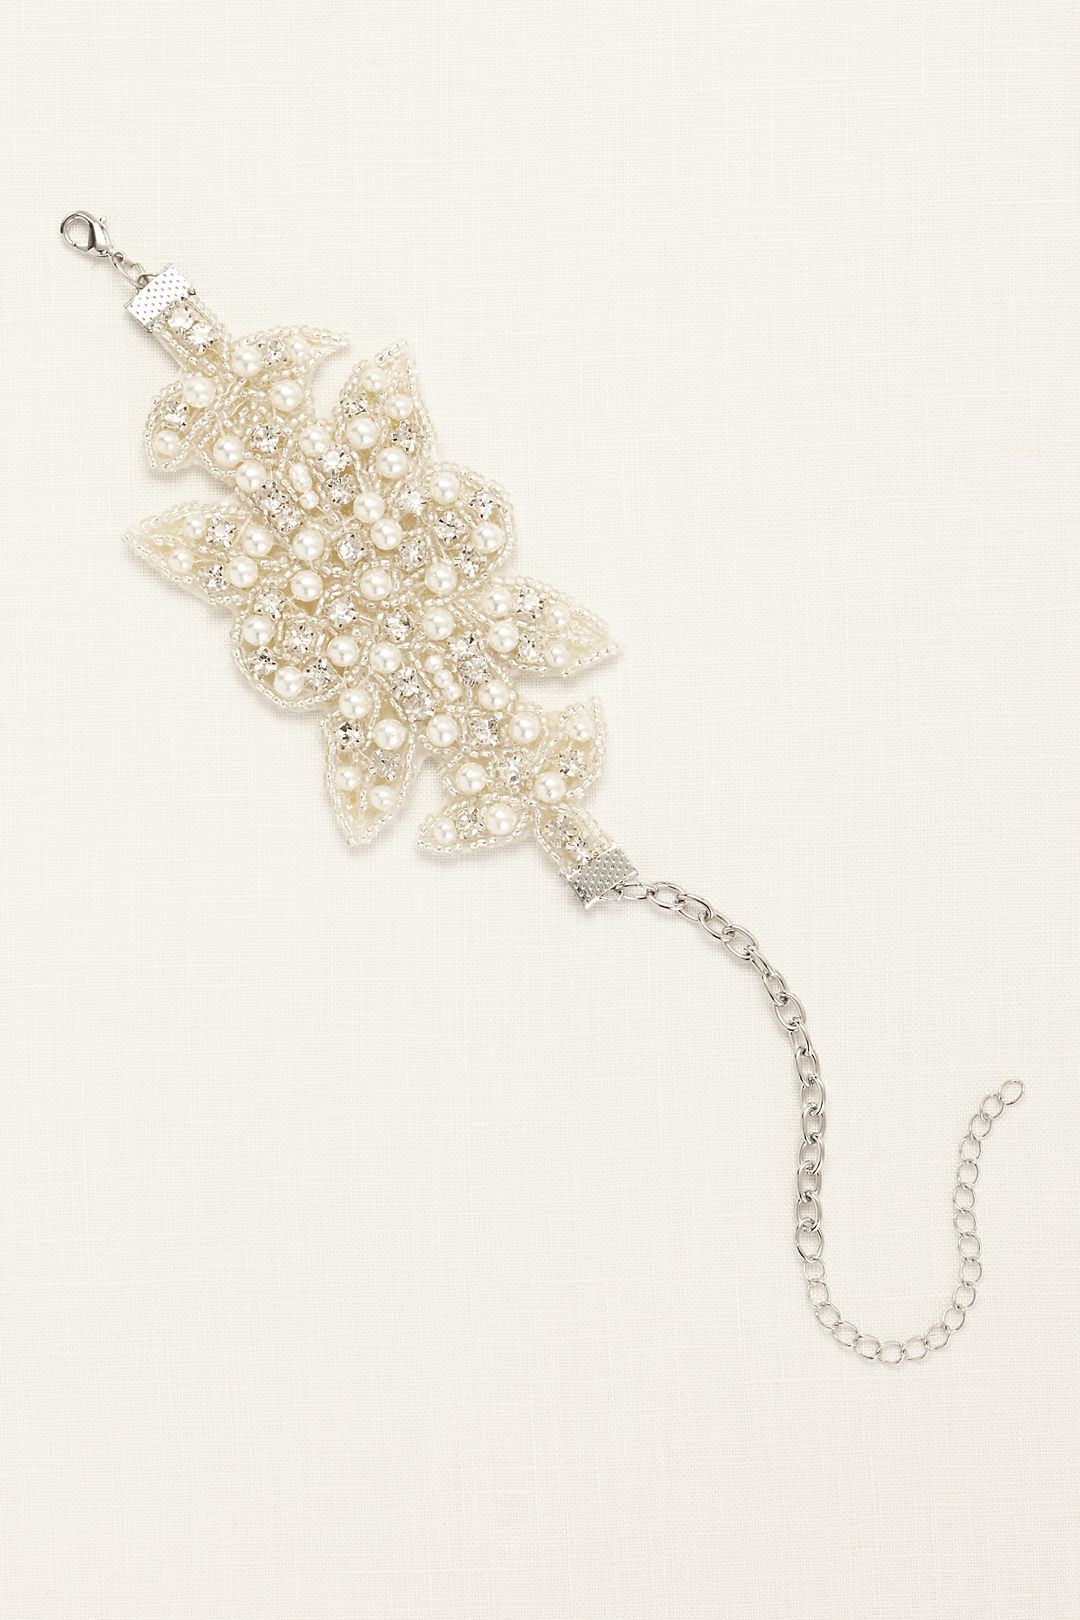 Pearl and Crystal Embellished Fabric Bracelet Image 2